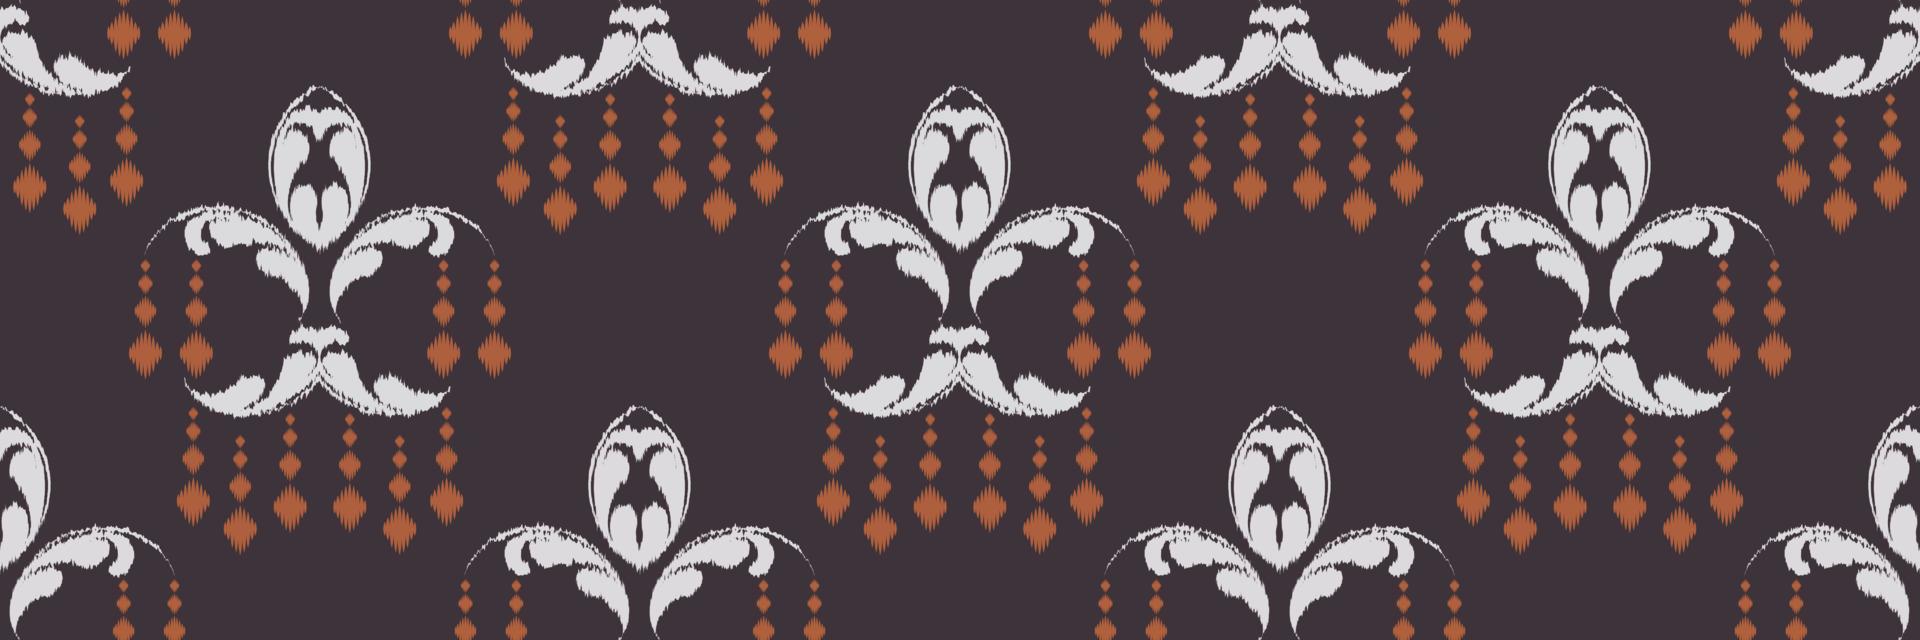 ikat damasco bordado escandinavo, ikat sem costura padrão tribal asteca, motivo vetorial digital têxtil design asiático arte antiga para estampas tecido saree mughal faixas textura kurti kurtis kurtas vetor